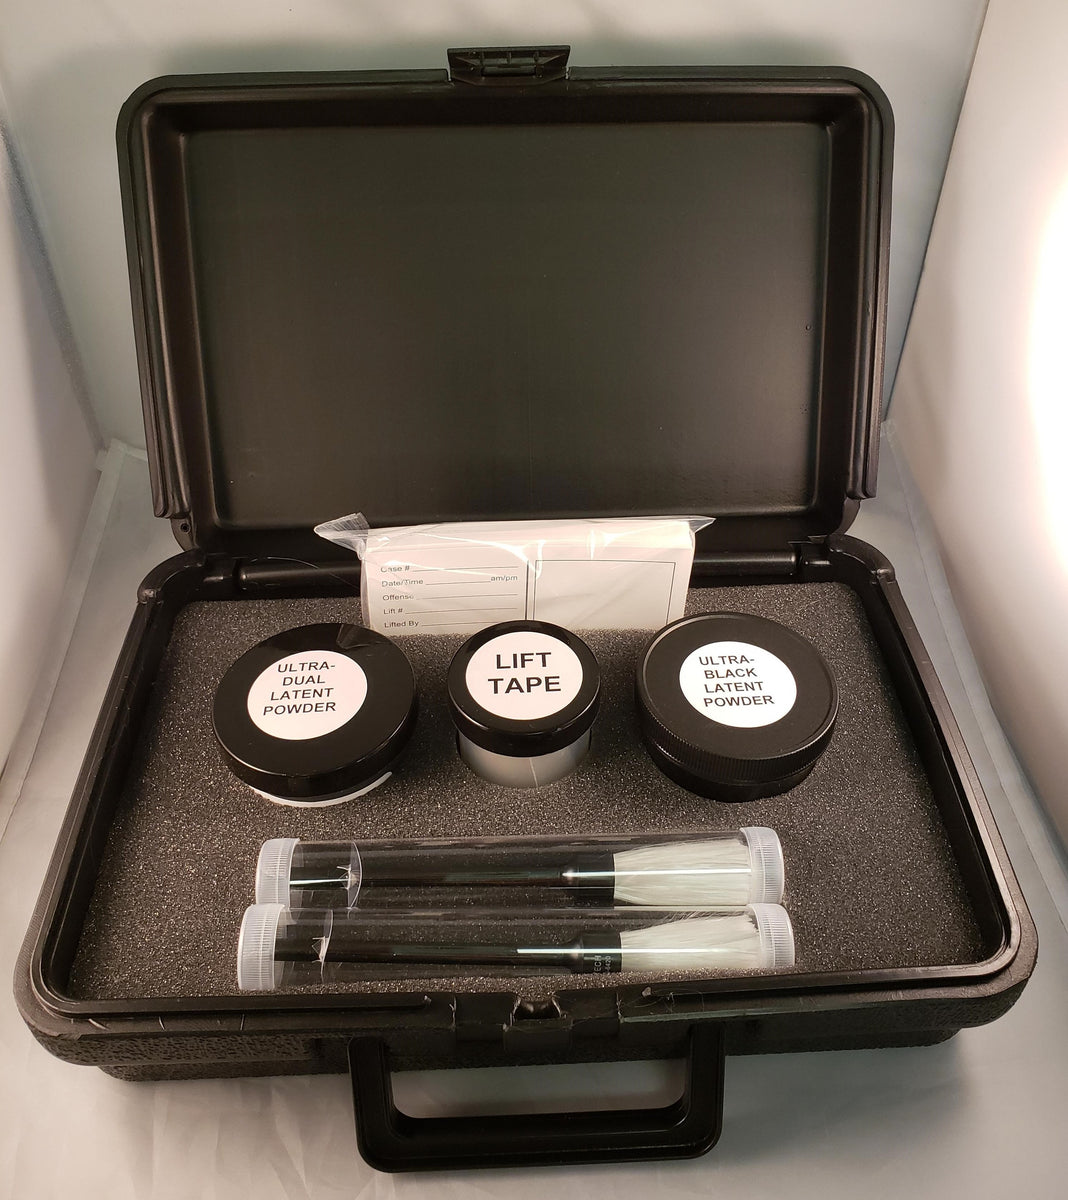 DNA Free Fingerprint Lifting Kit with Fiberglass Brush by Sirchie